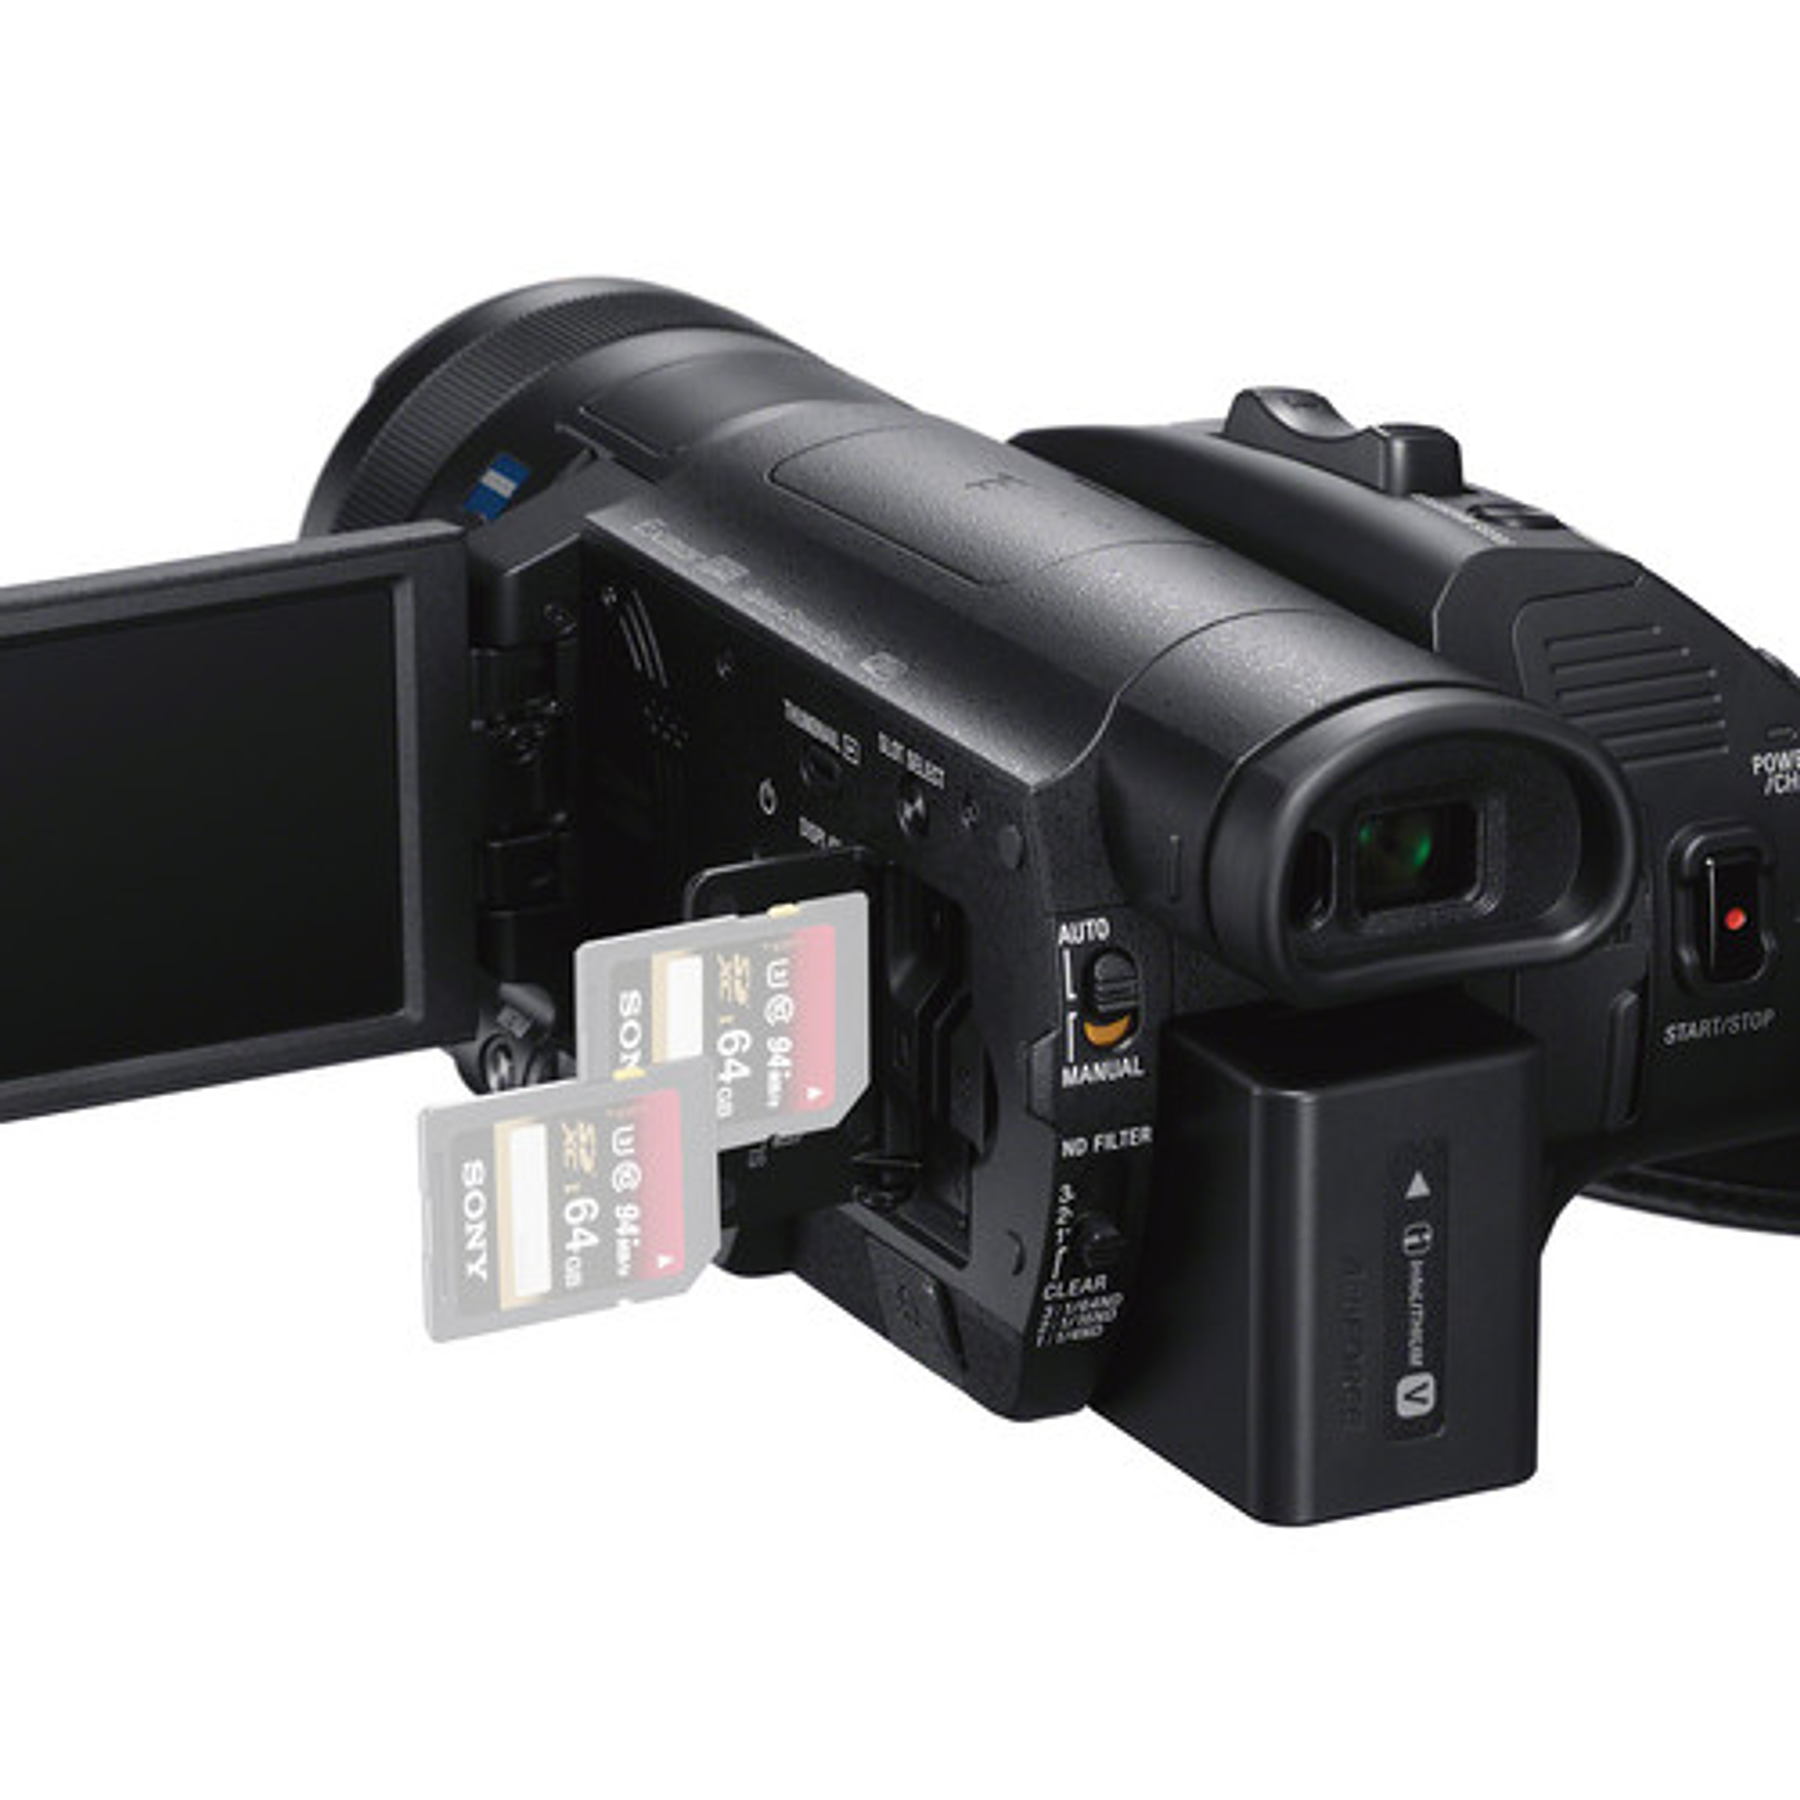 Videocámara FDR-AX700 4K HDR